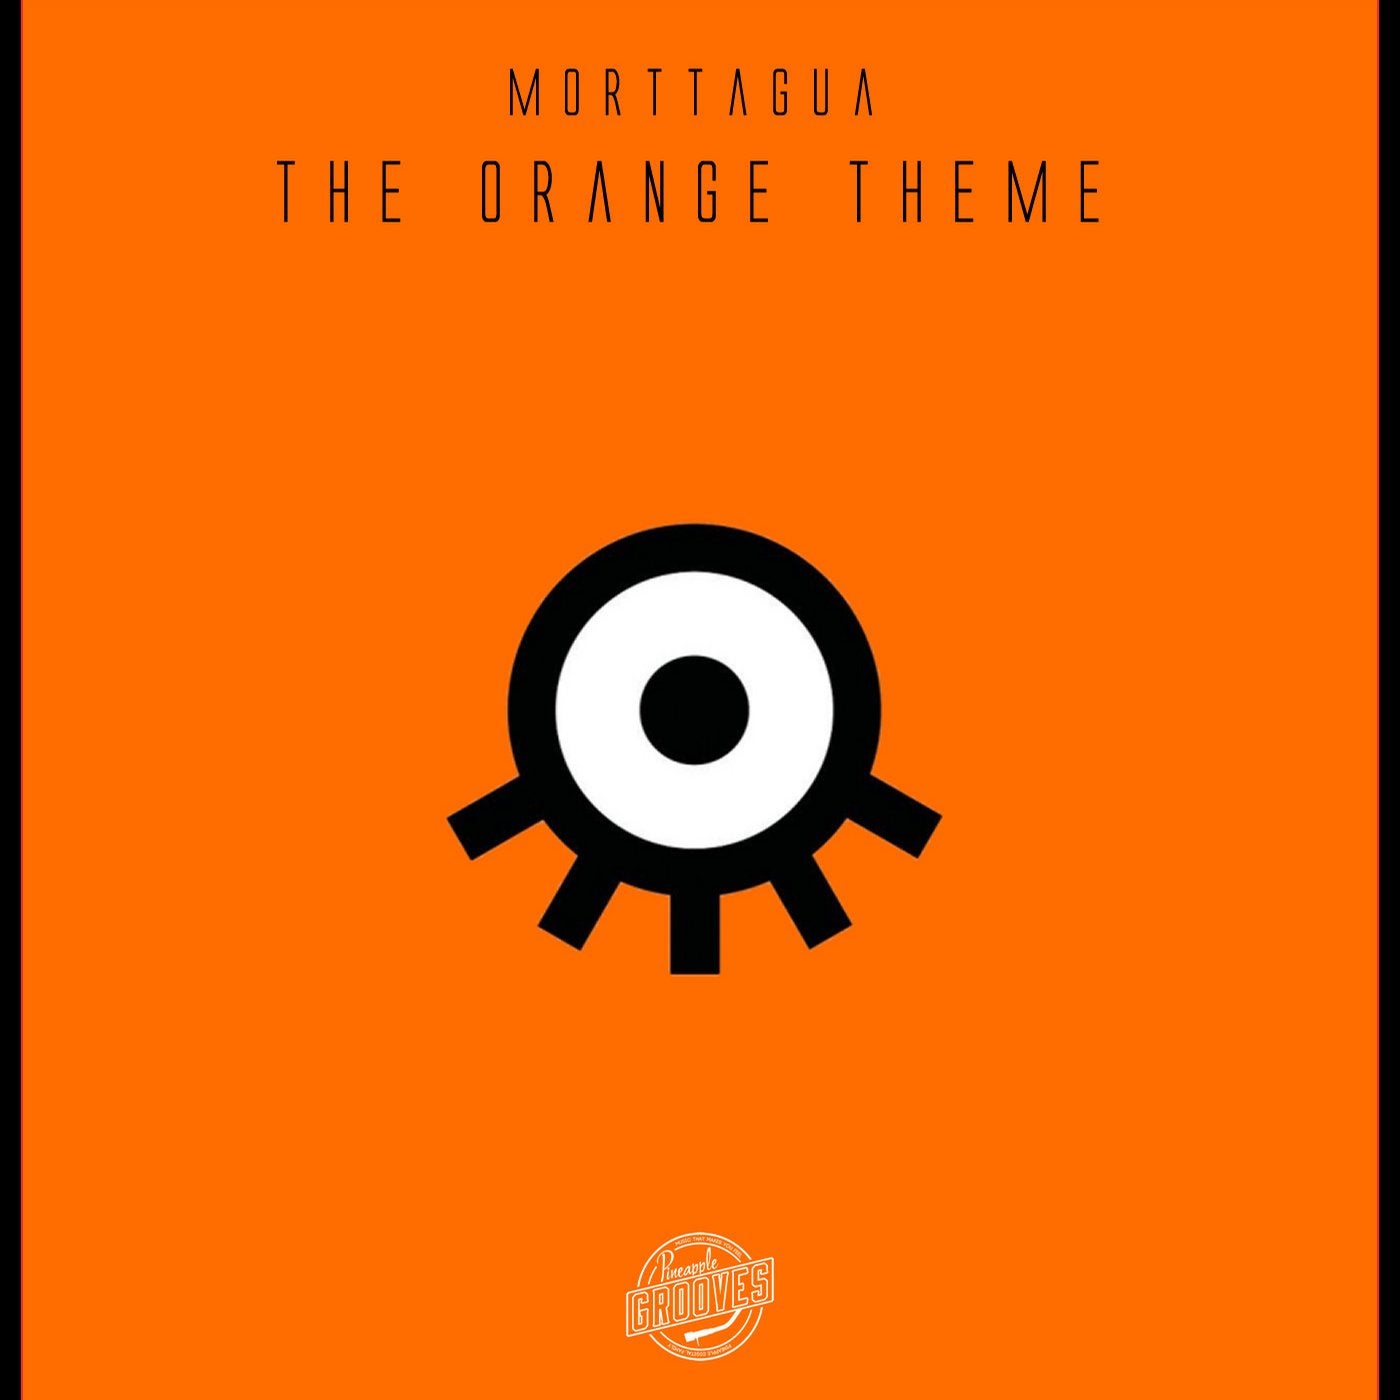 The Orange Theme